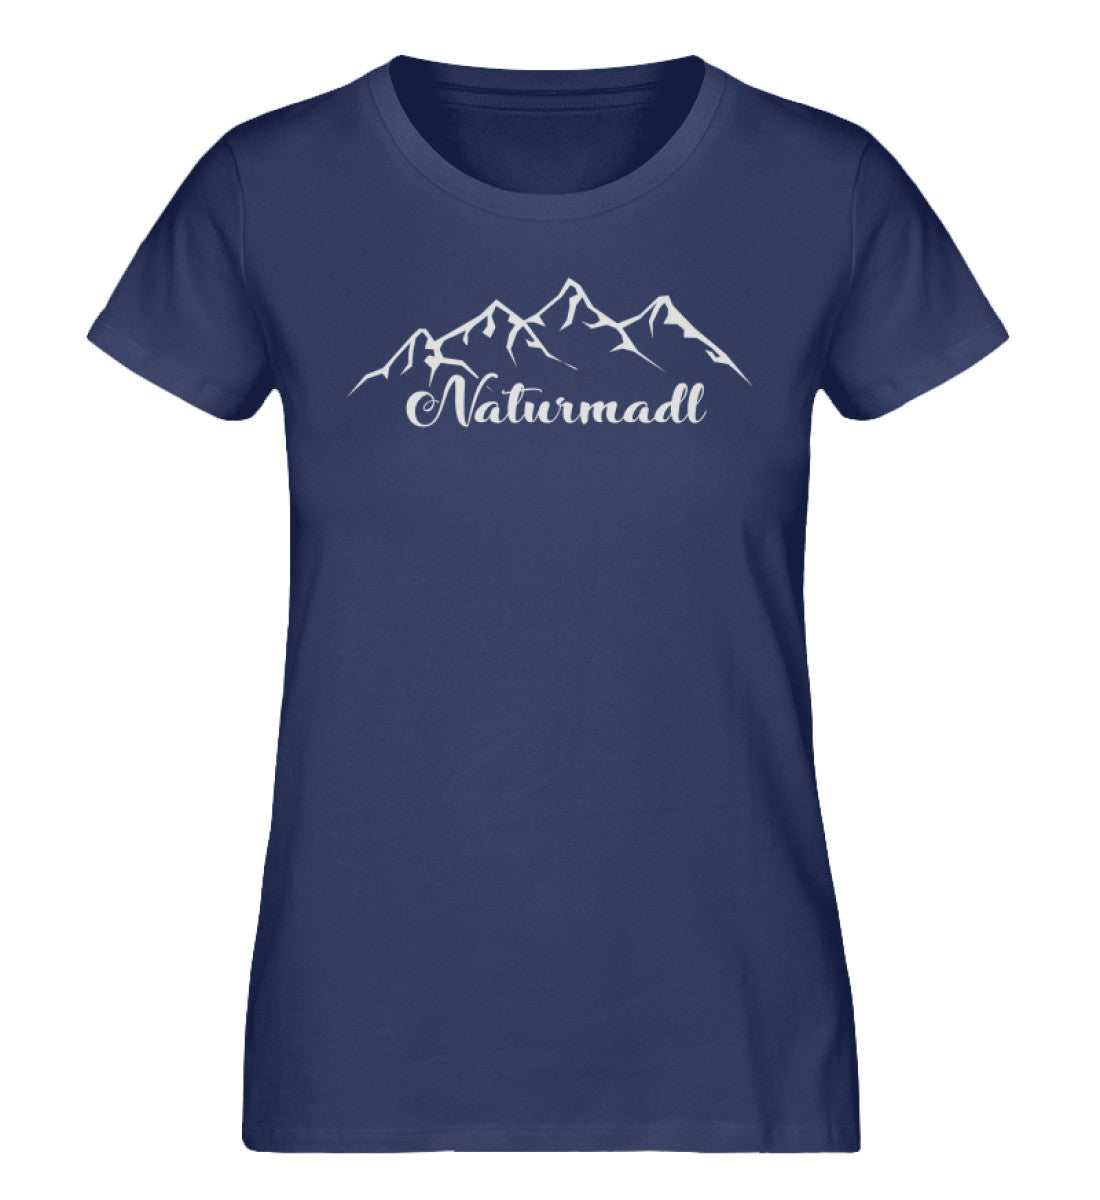 Naturmadl - Damen Organic T-Shirt camping wandern Navyblau